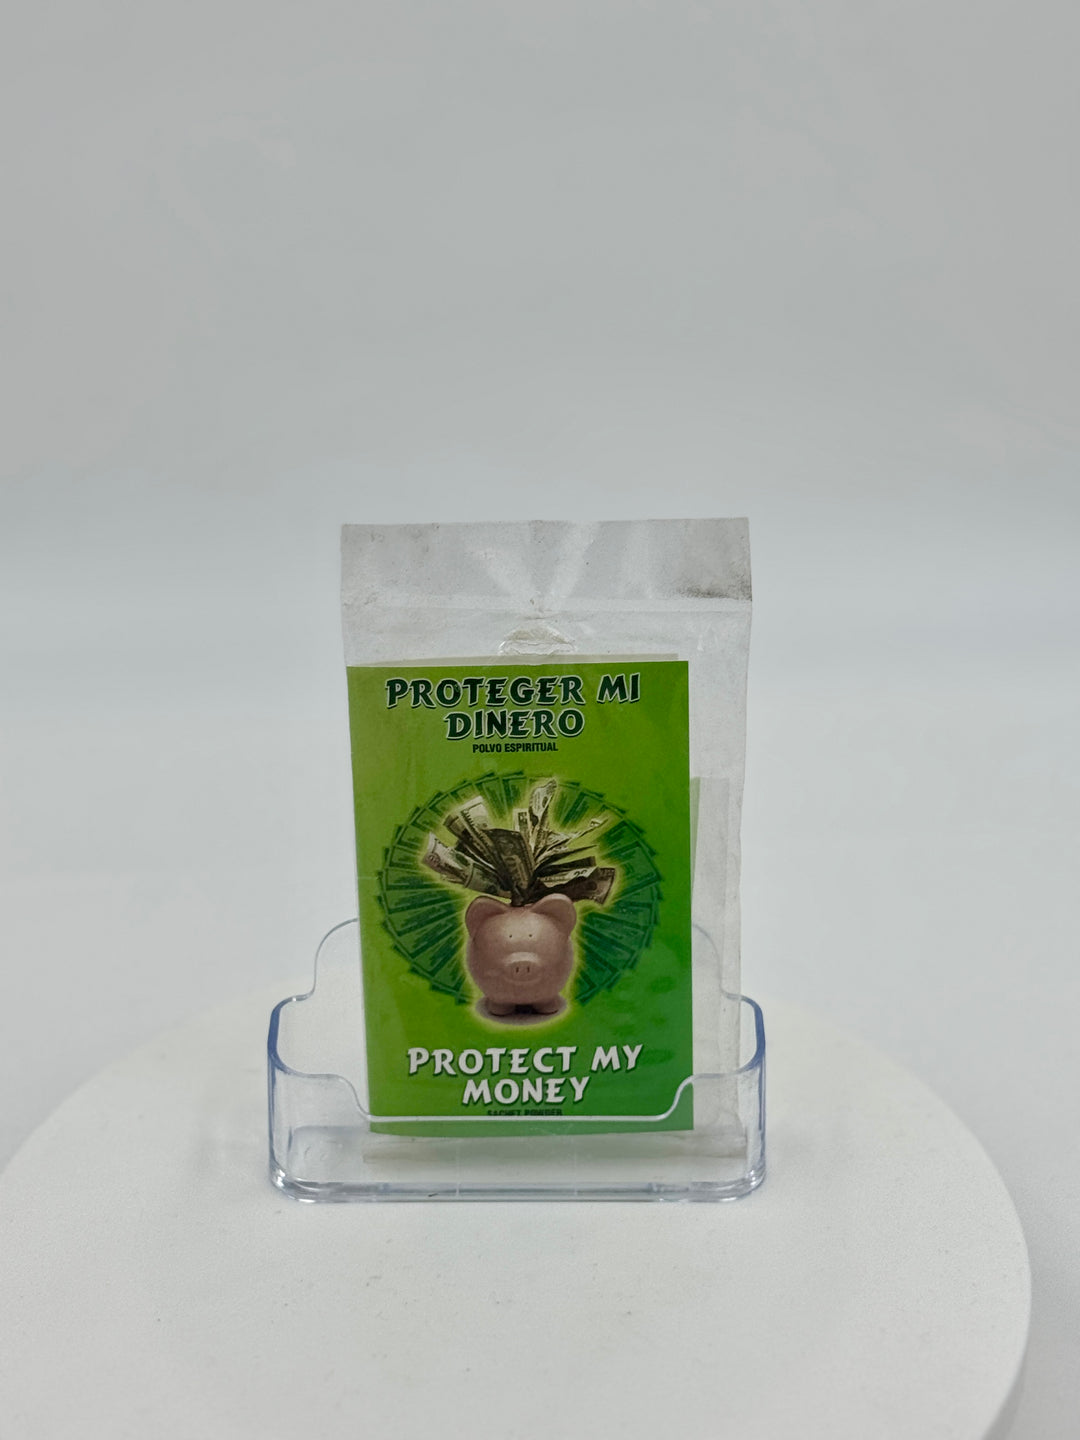 PROTECT MY MONEY (PROTEGER MI DINERO) -Powder/Polvo